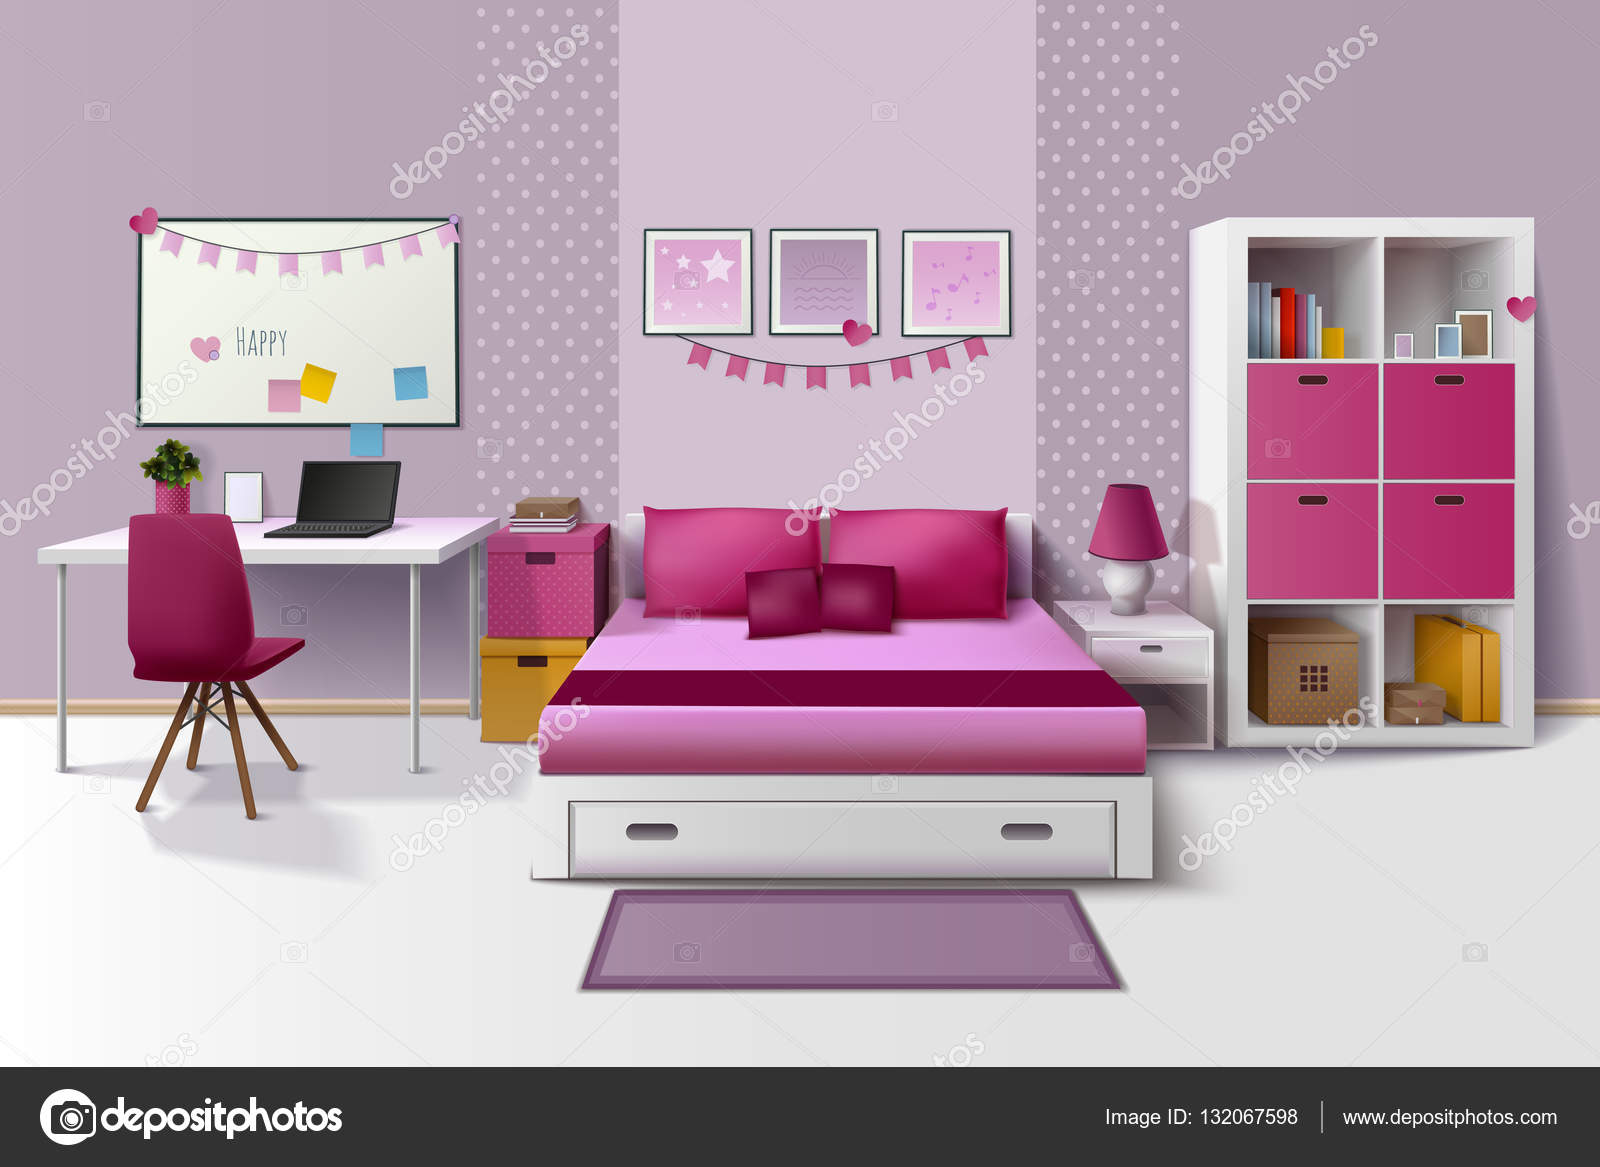 Teen Girl Room Interior Realistic Image Stock Vector